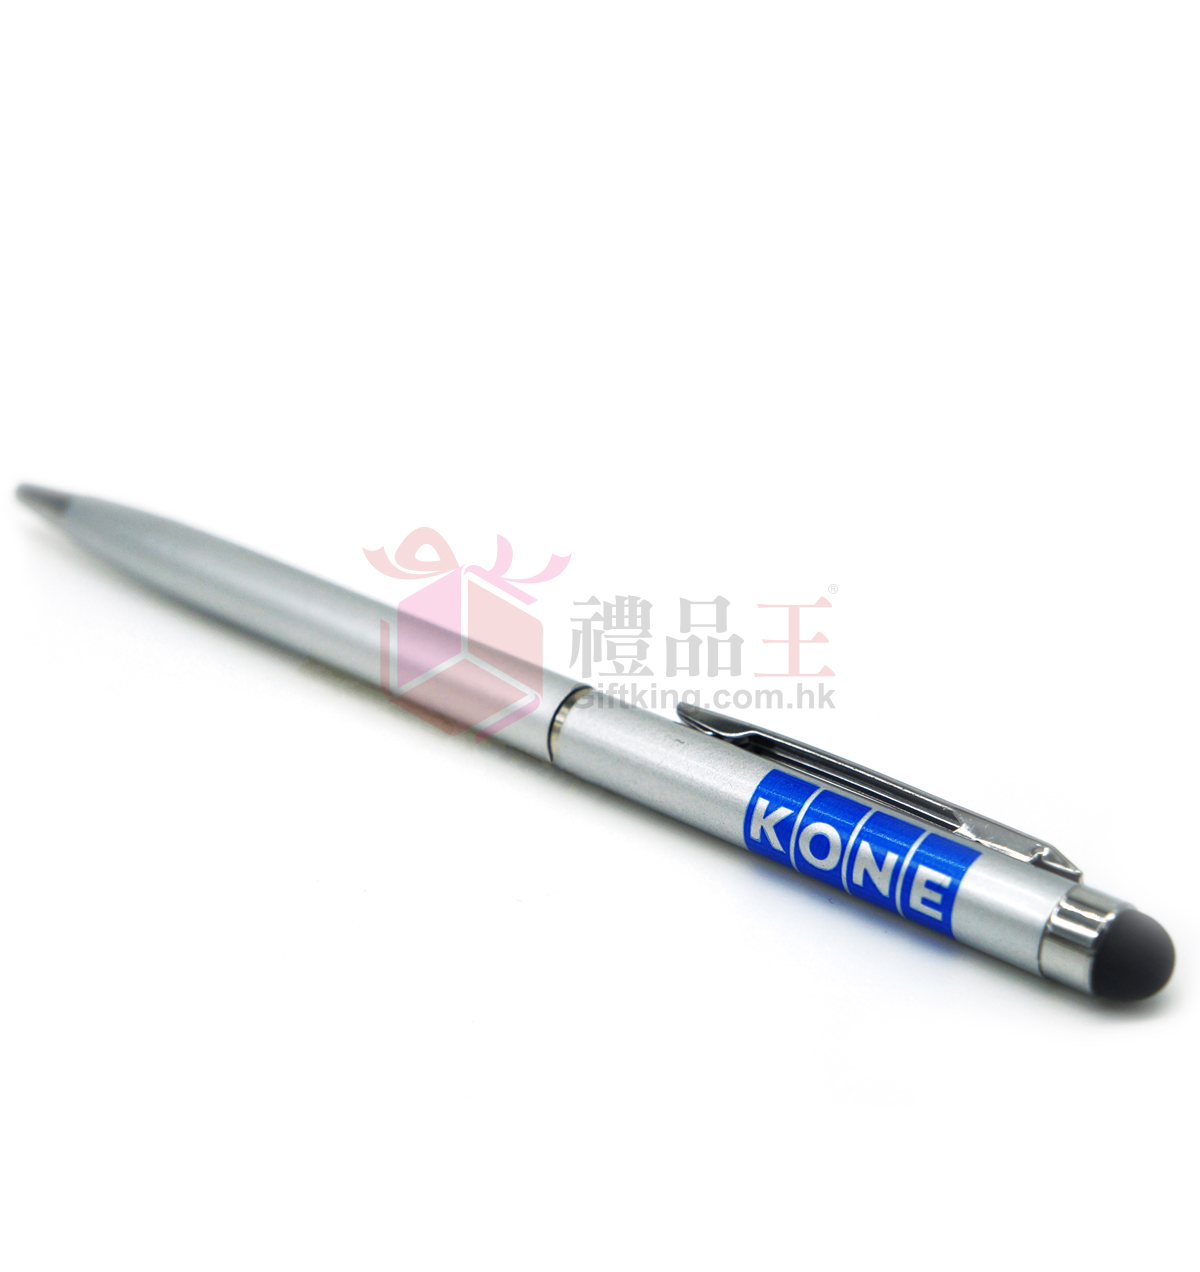 Kone pen (Mobile phone gift)